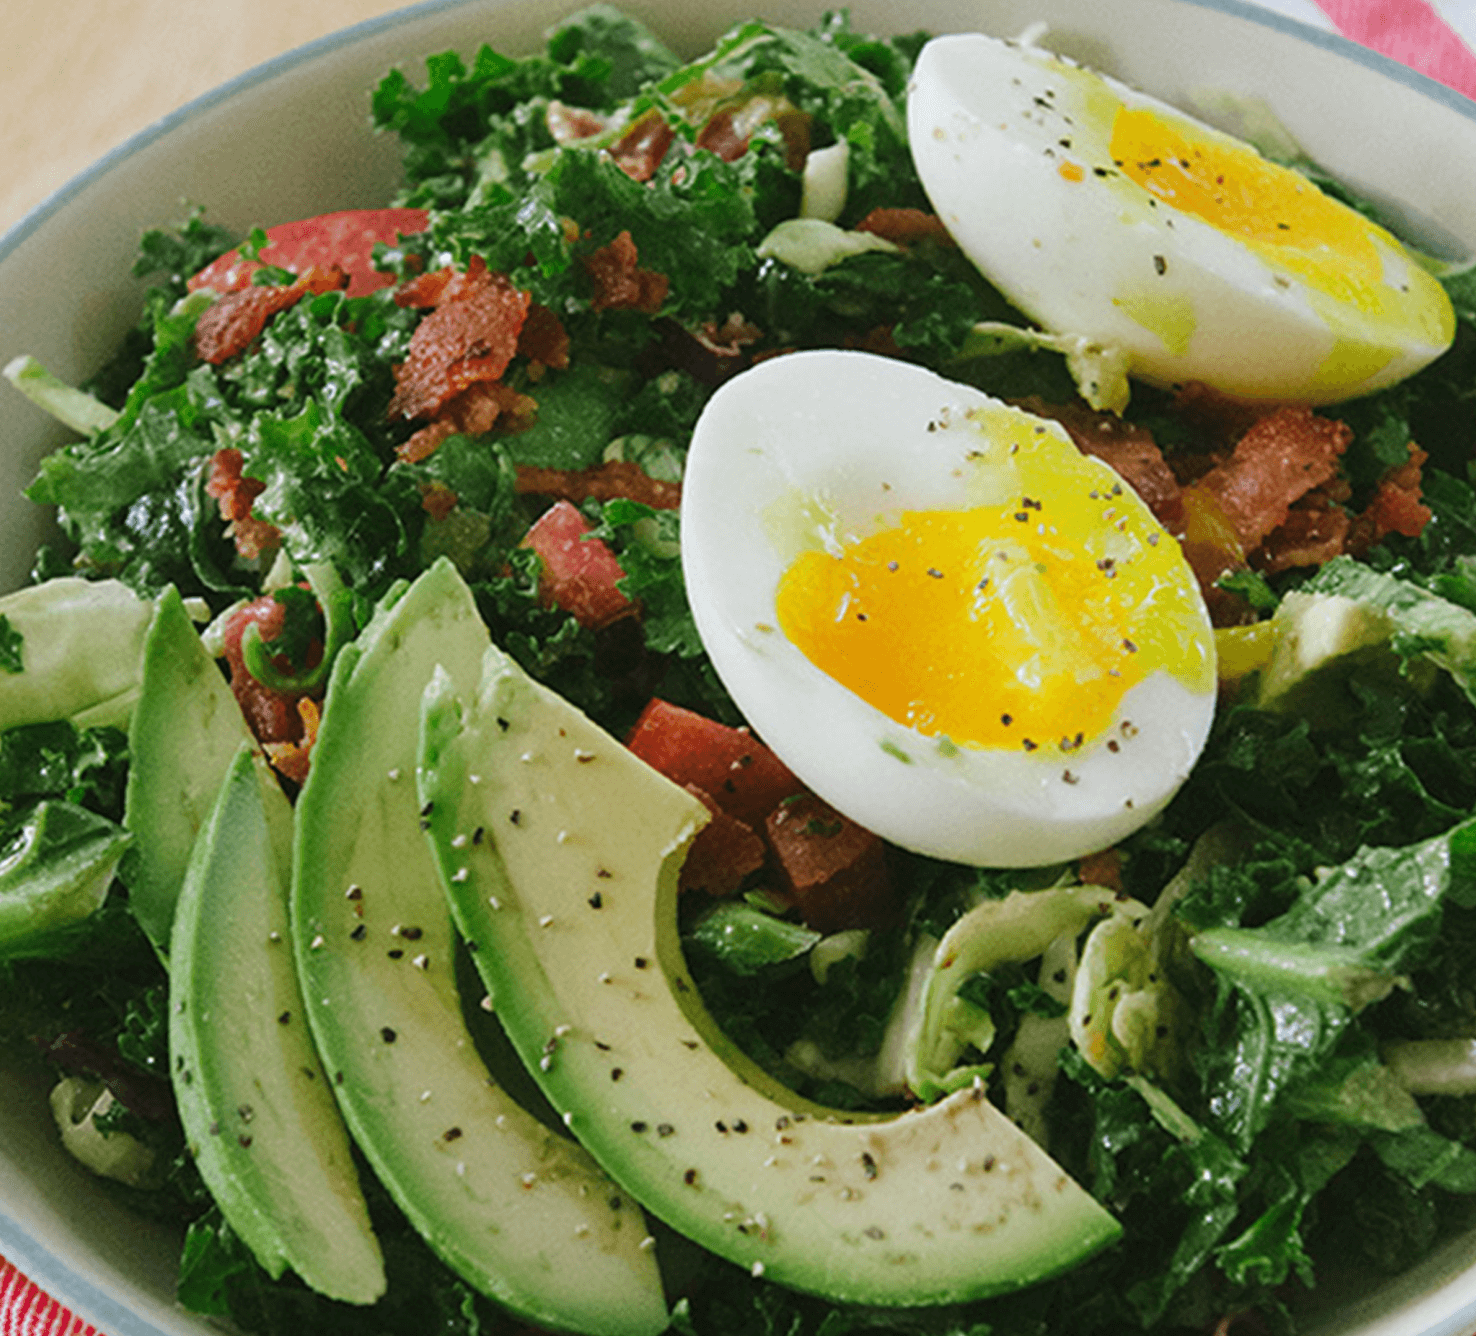 BLT breakfast salad with egg